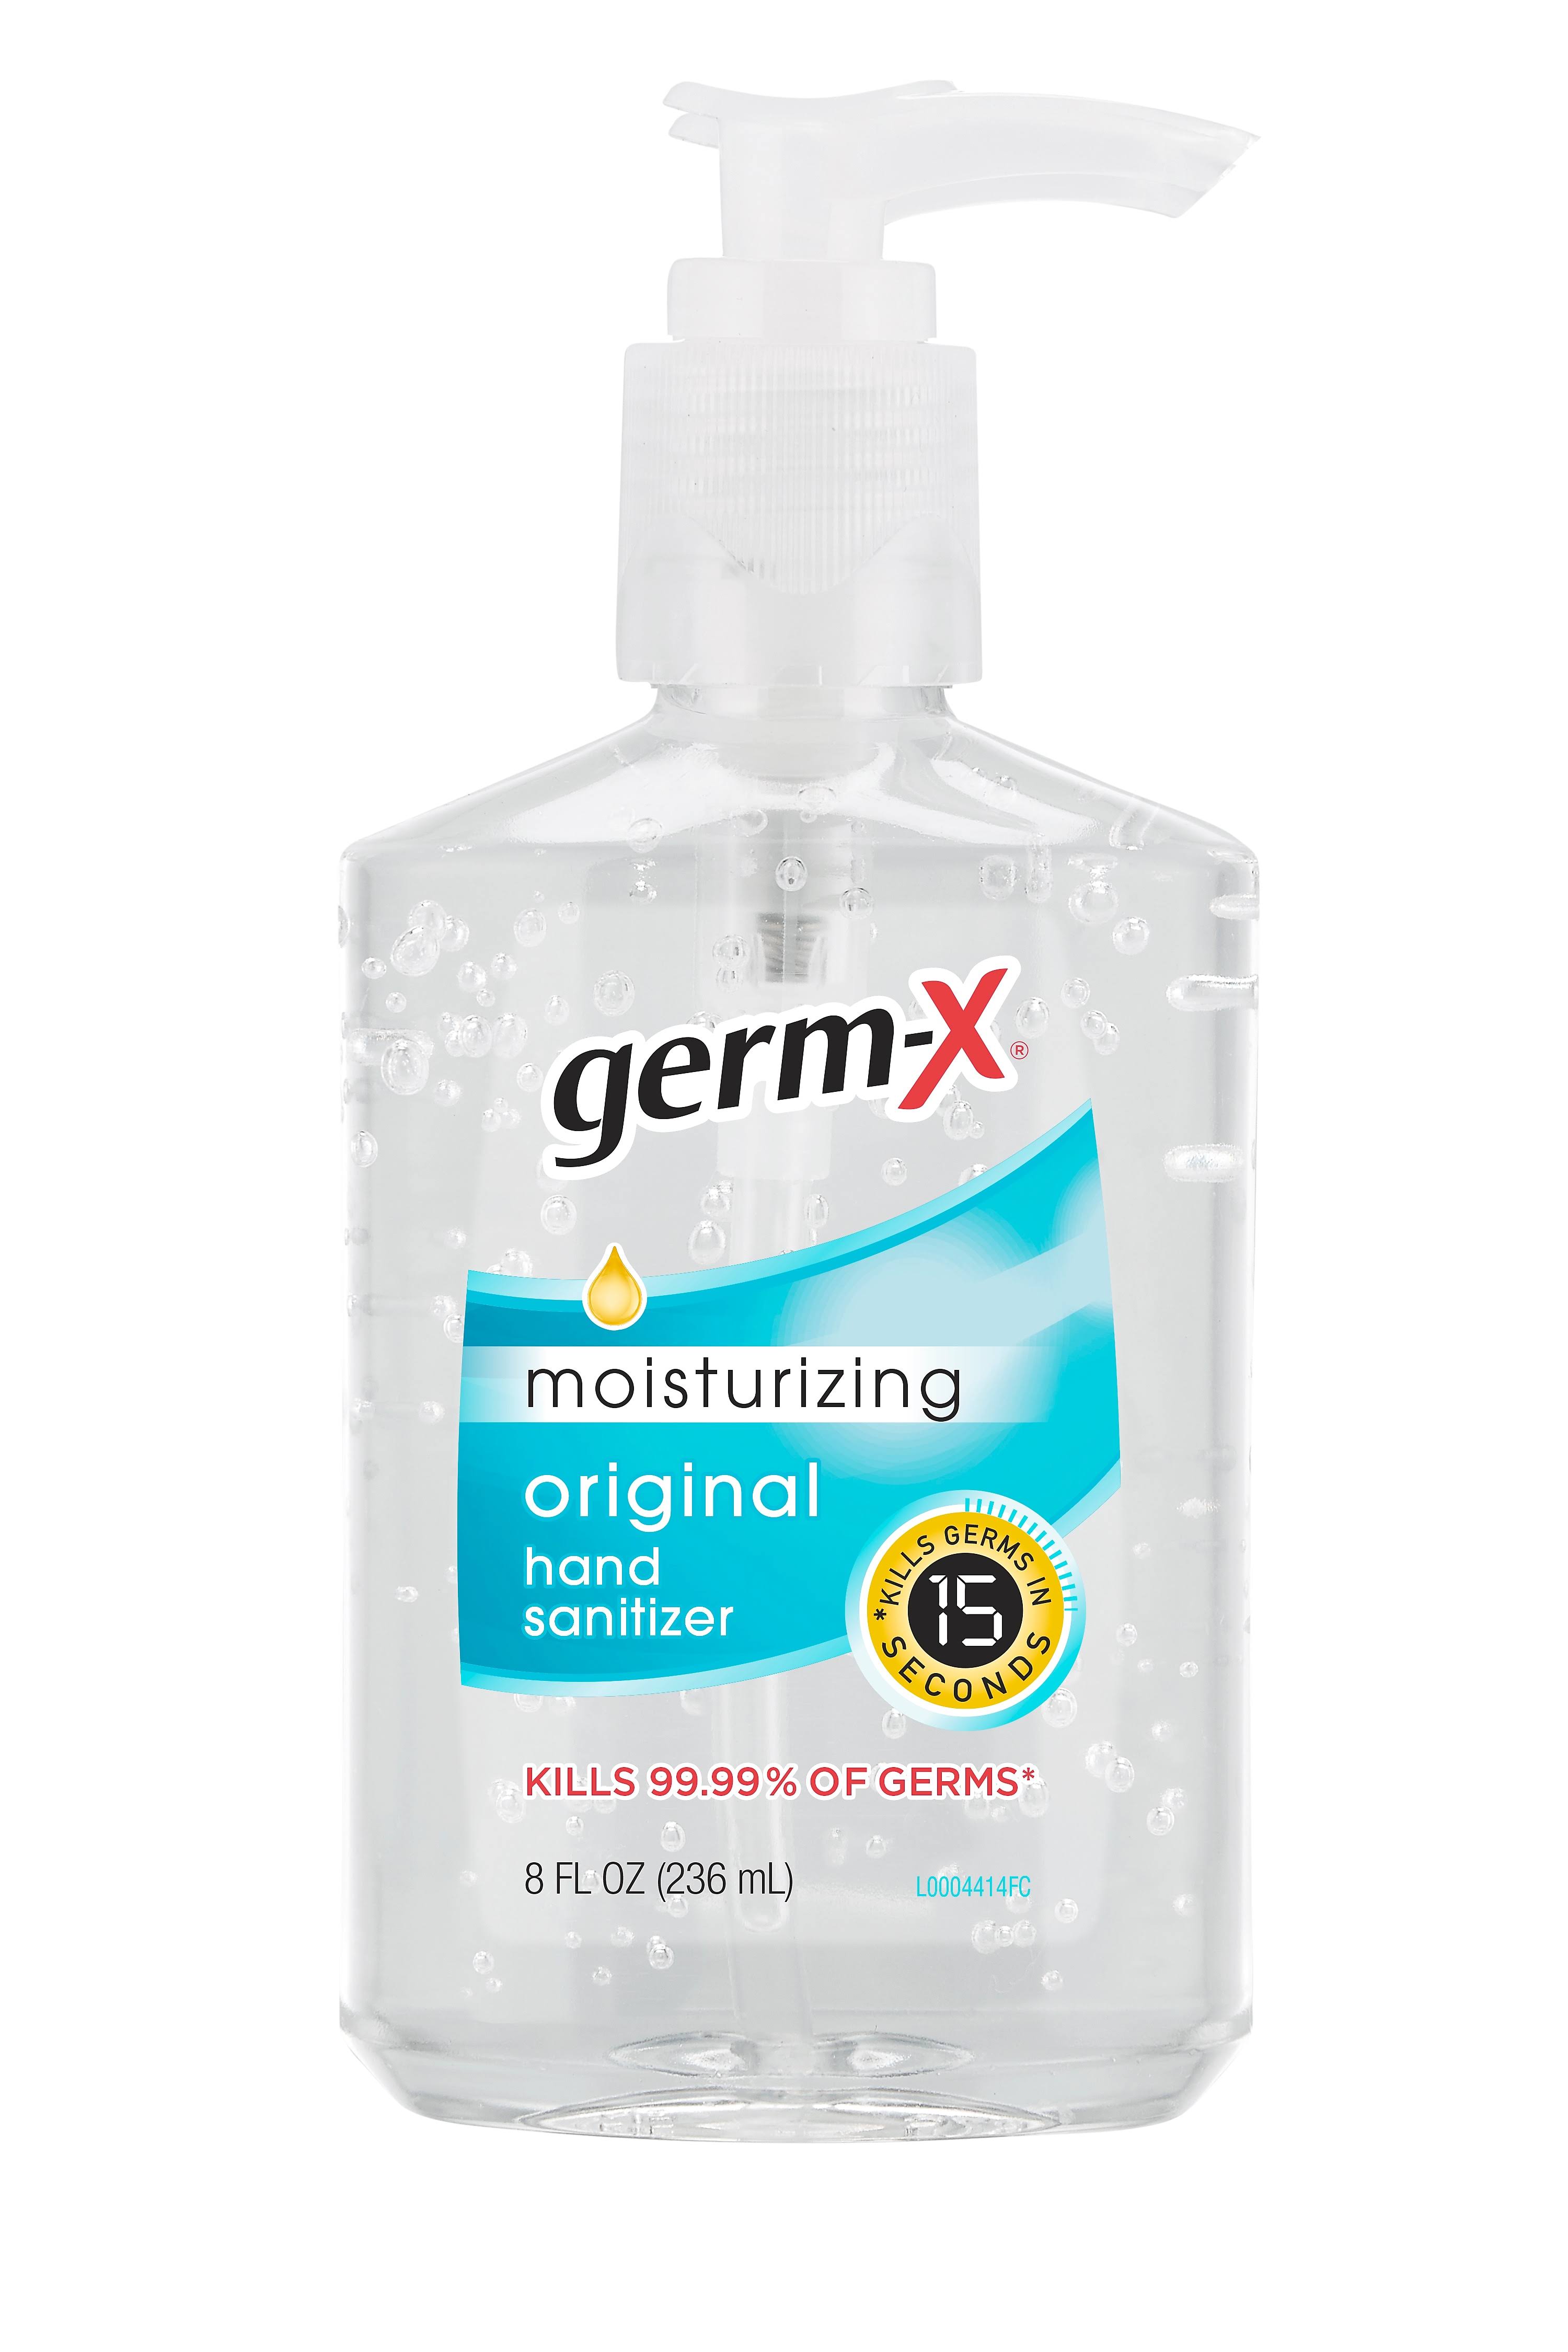 Germ X Hand Sanitizer, Original, Moisturizing - 8 fl oz